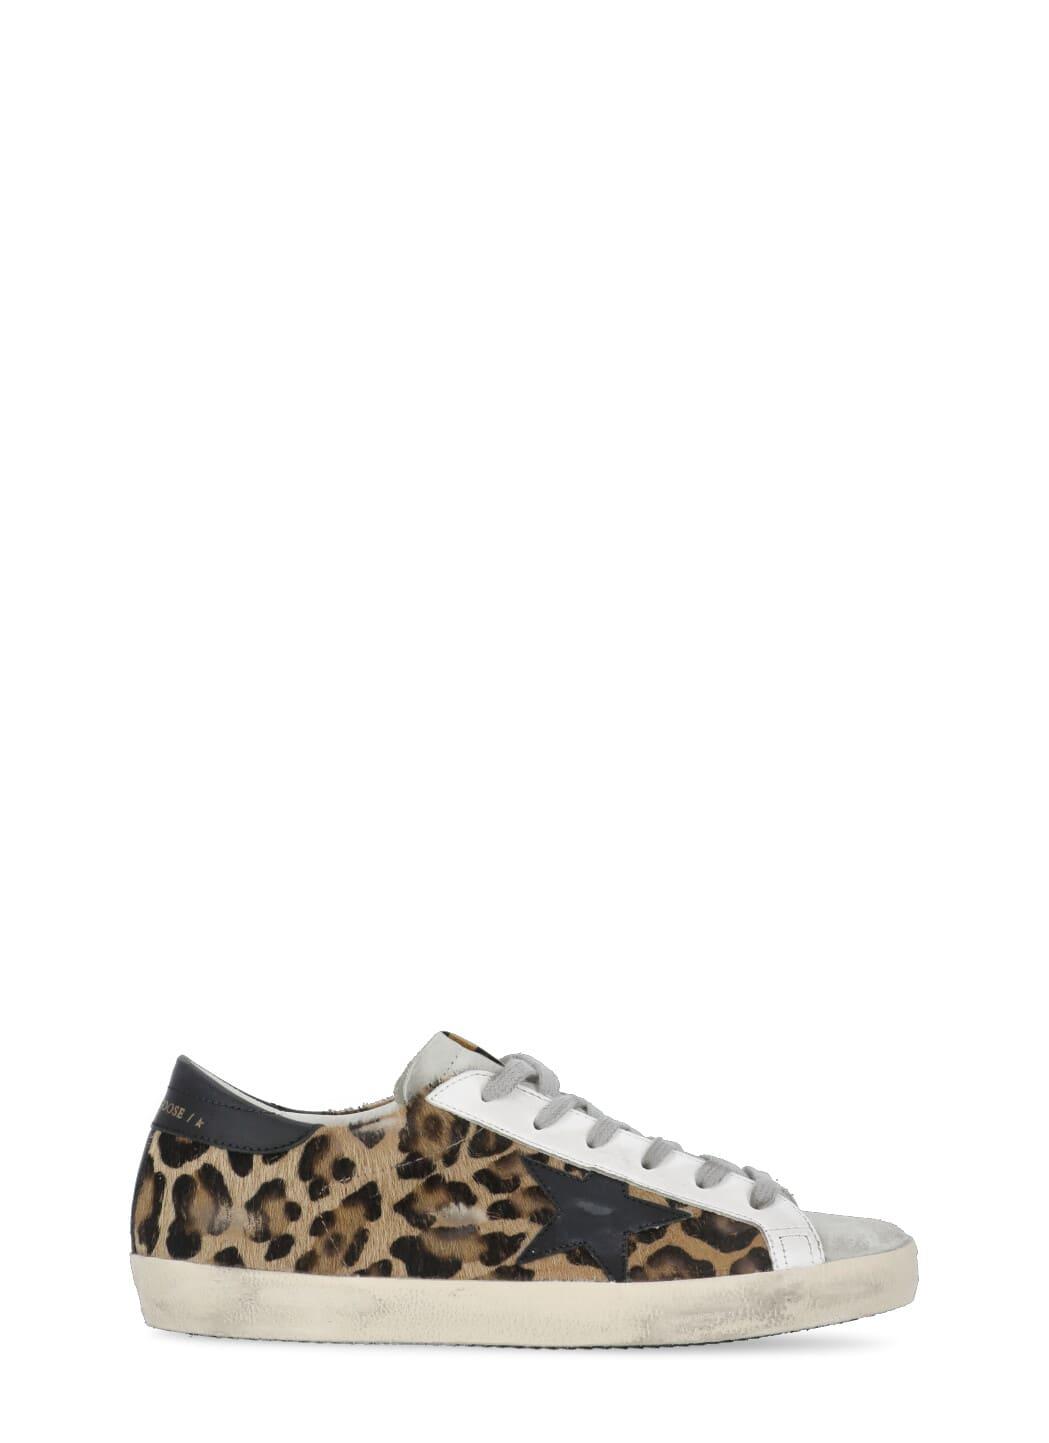 Golden Goose Star Leopard Sneakers | Lyst